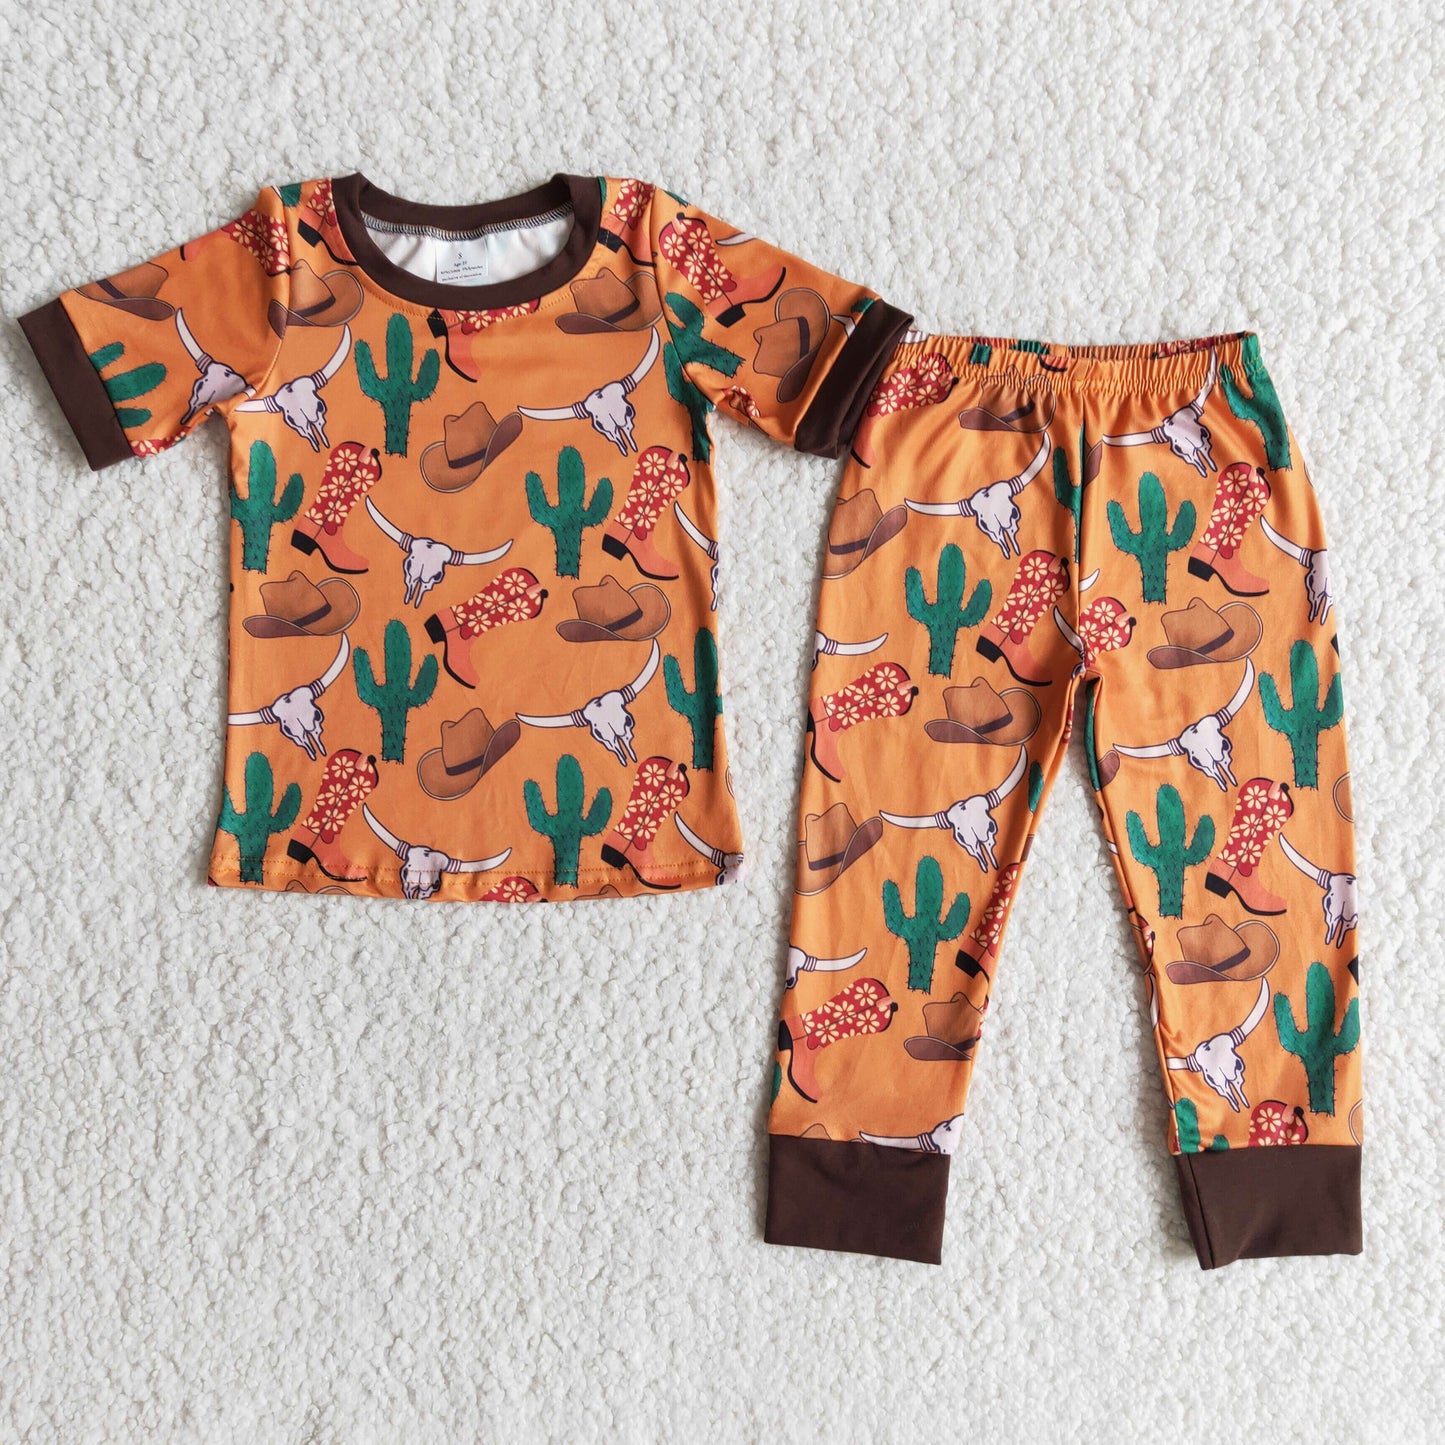 Short sleeve cactus boots boy boutique pajamas